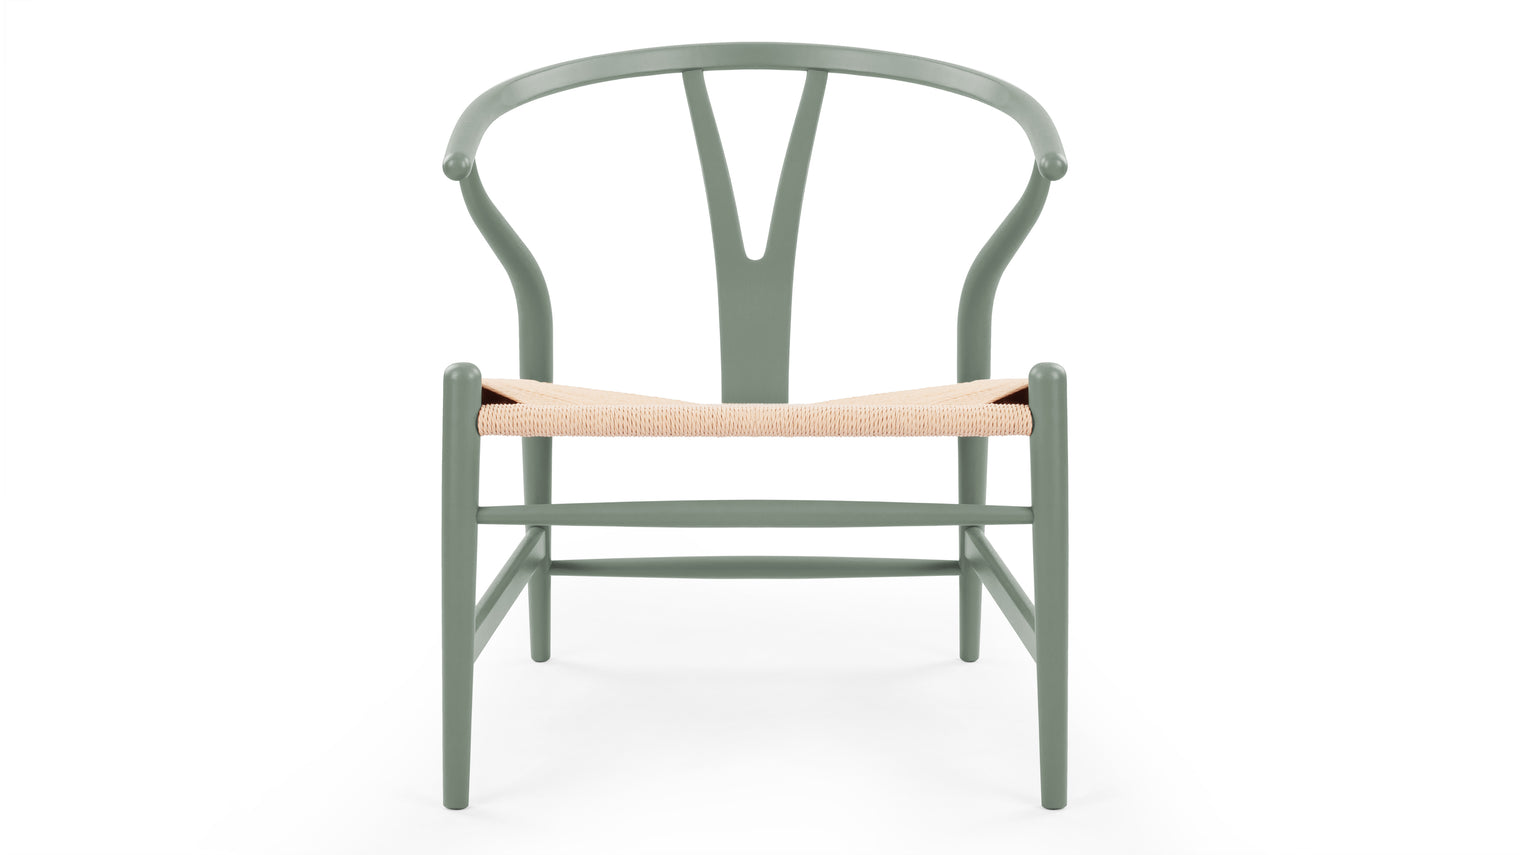 Wish - Wish Lounge Chair, Green